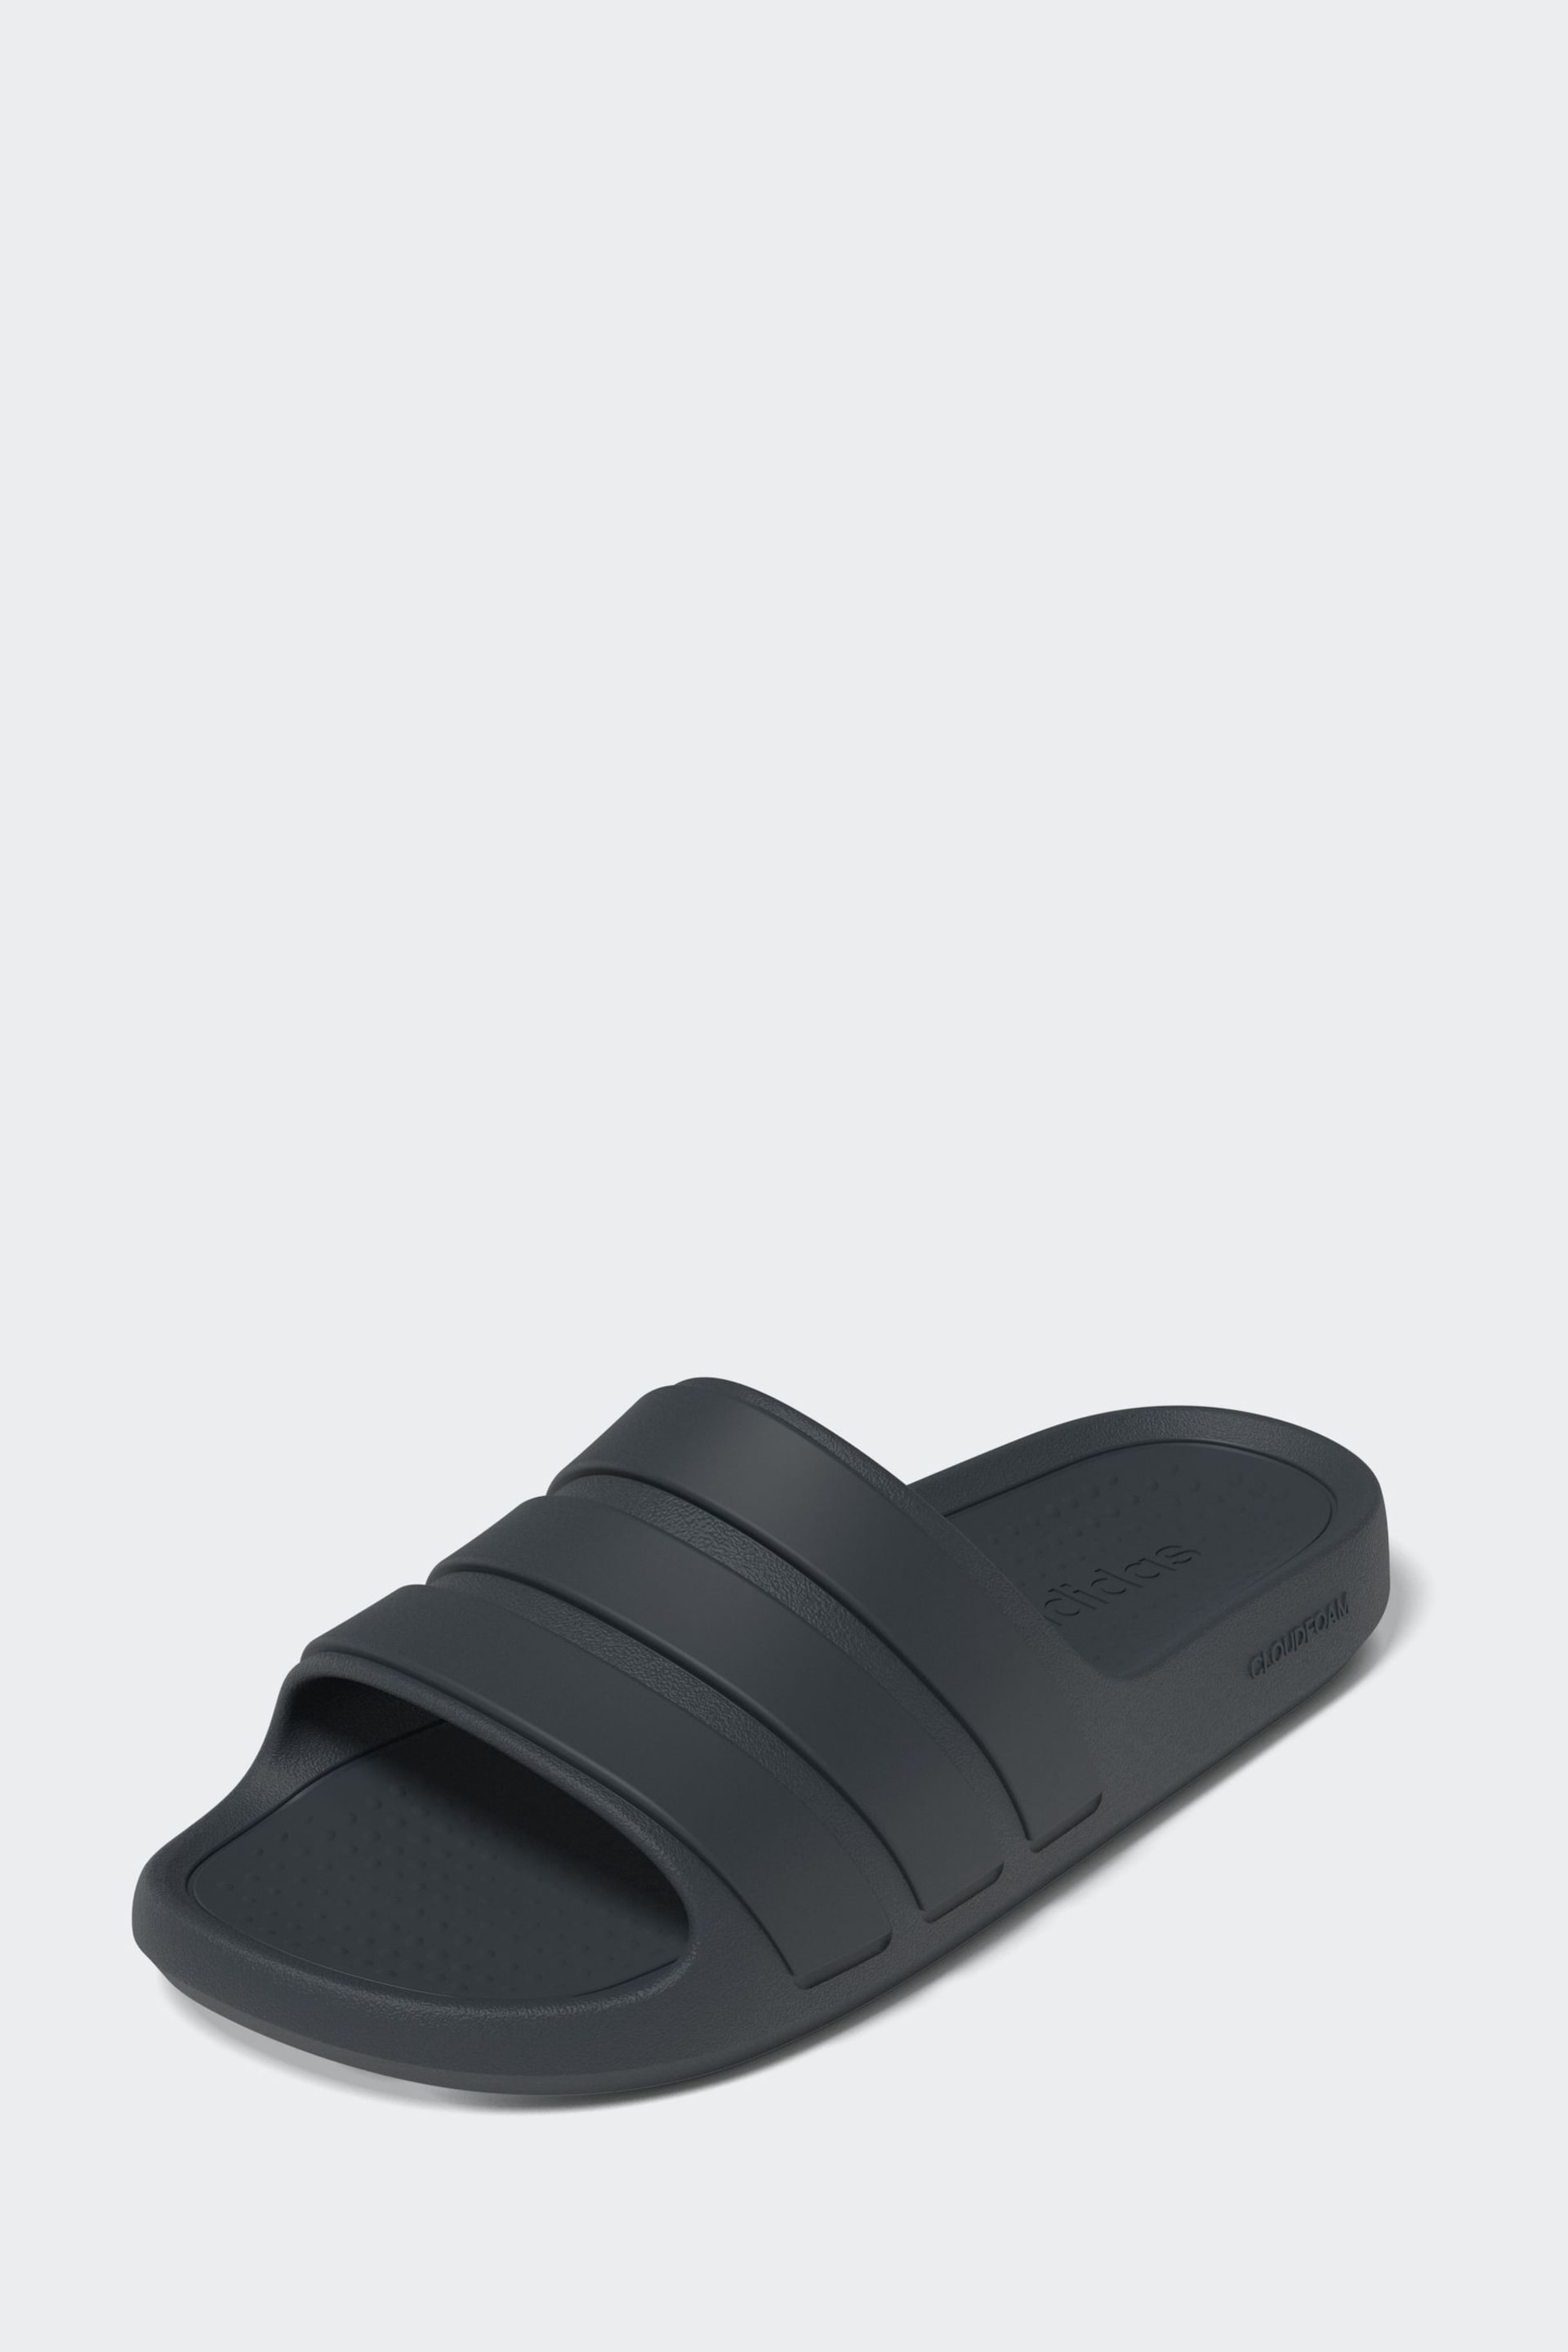 adidas Black Adilette Flow Sandals - Image 14 of 18